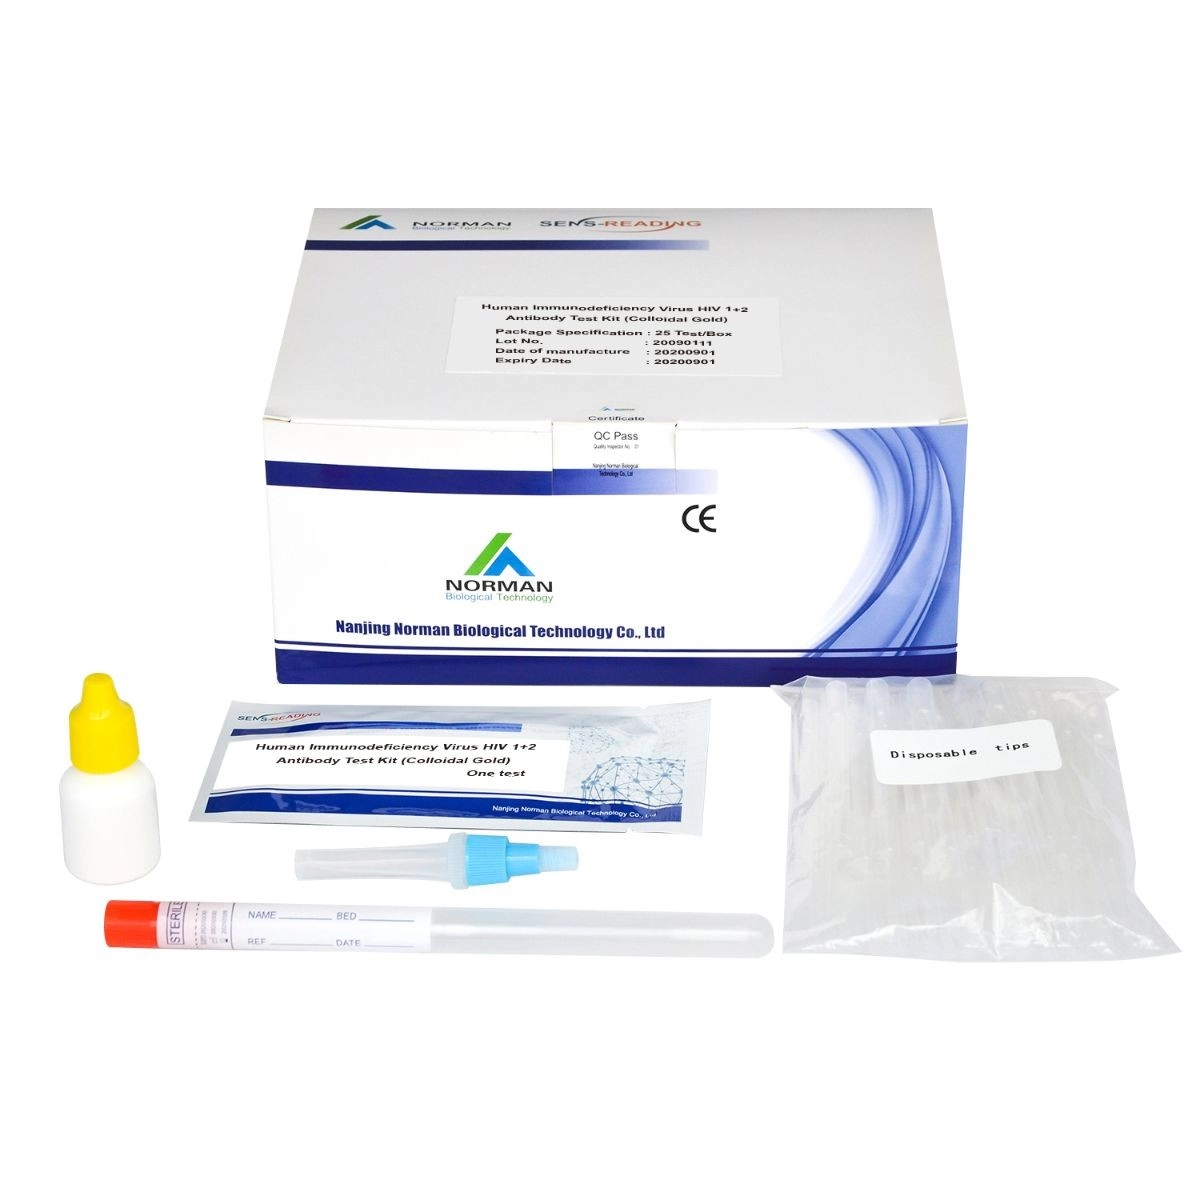 Kit Pengujian Antibodi HIV 1/2 Human Immunodeficiency Virus